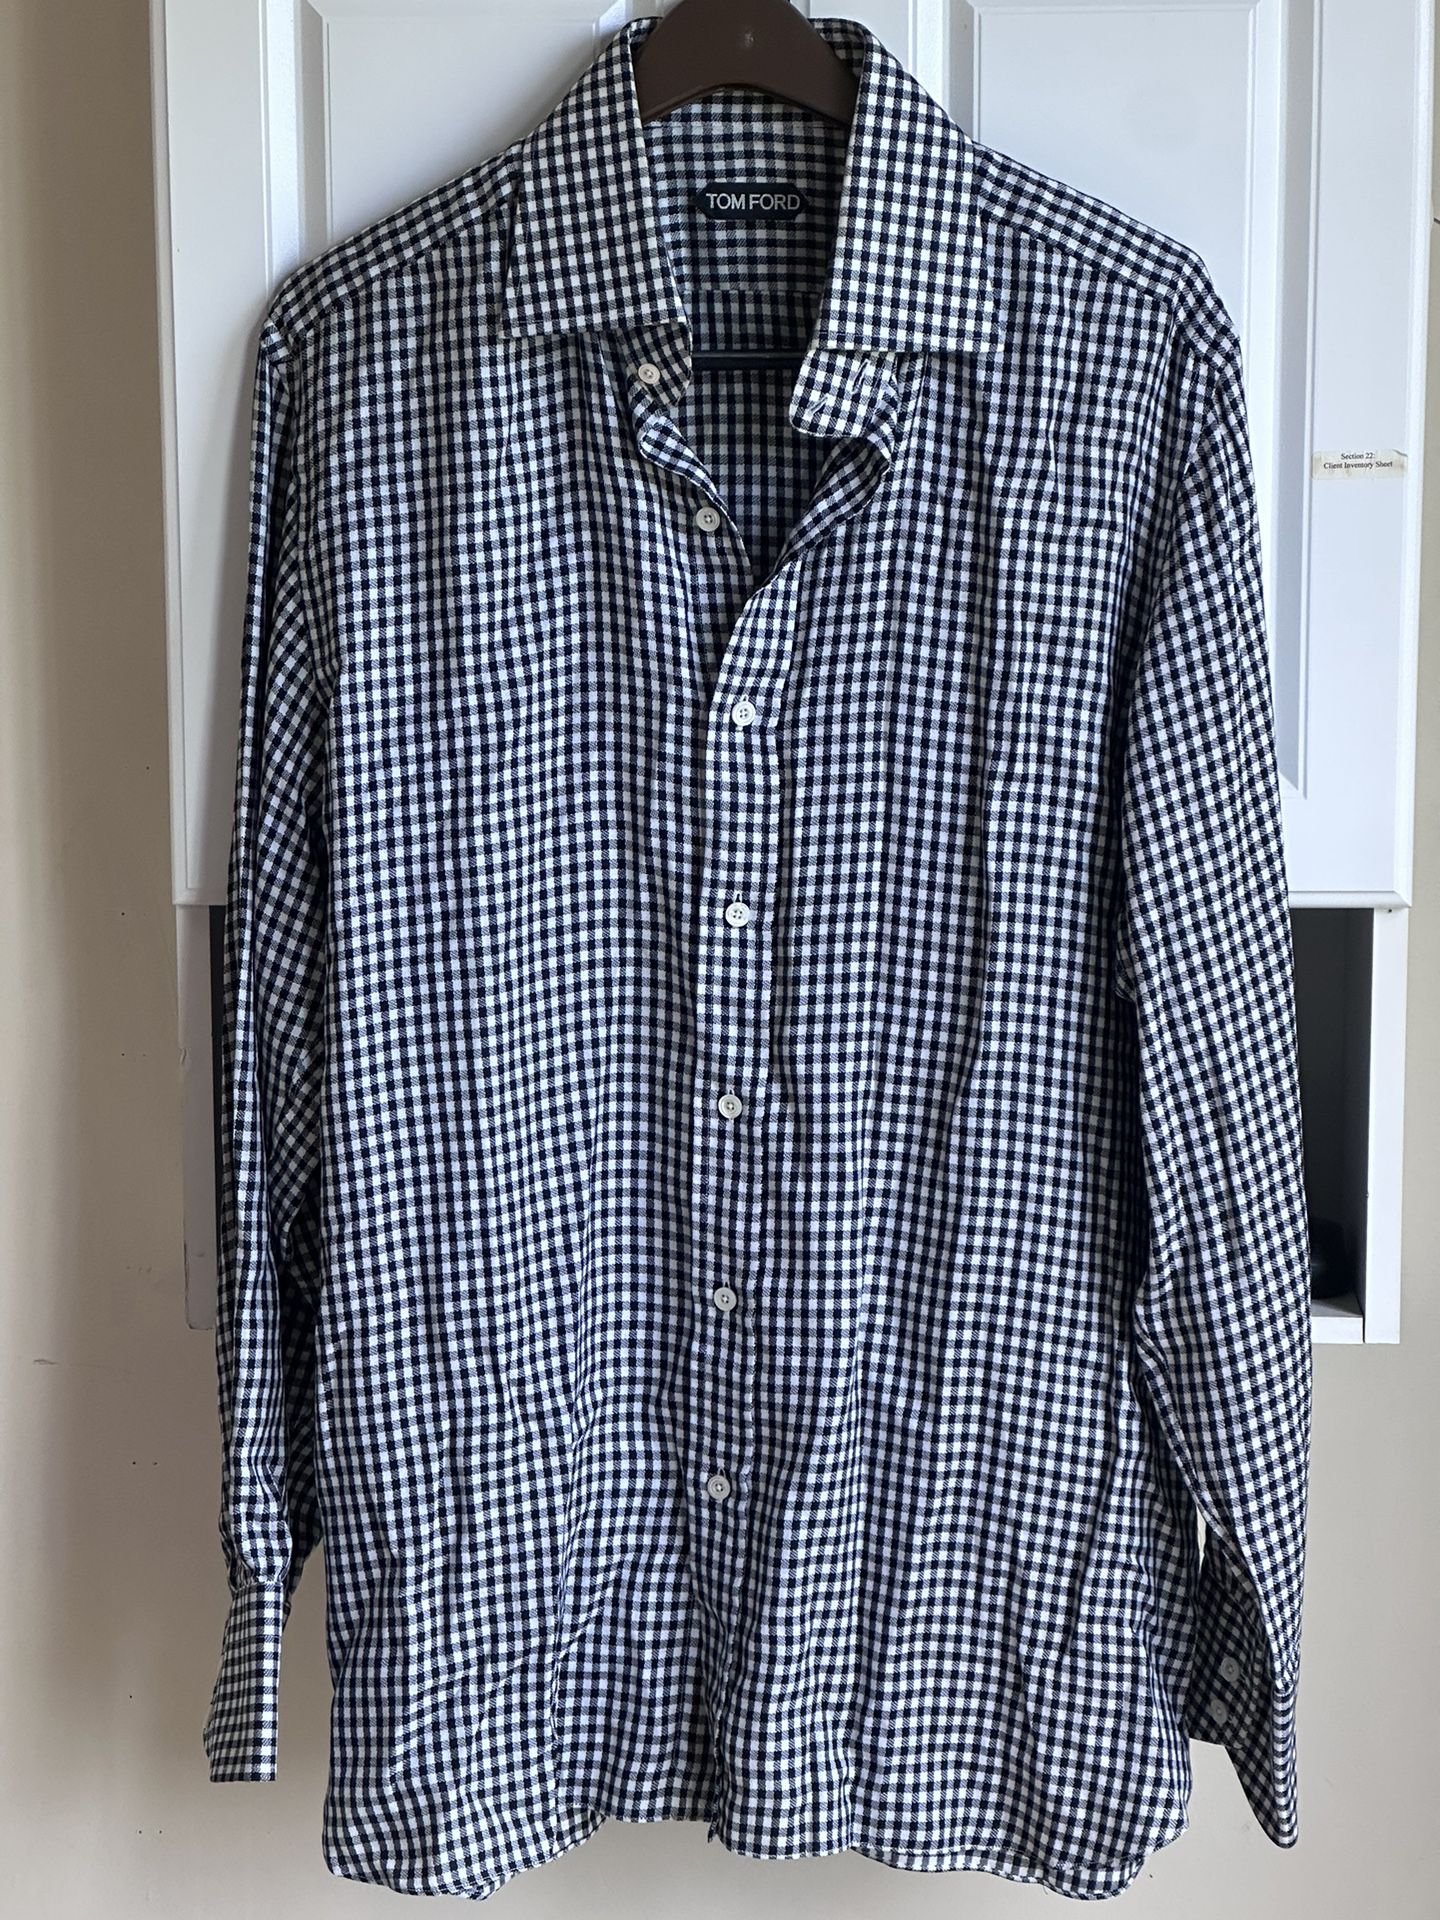 Tom Ford Plaid Print White and Blue Check Men’s Long Sleeve Dress Shirt Size 17/43